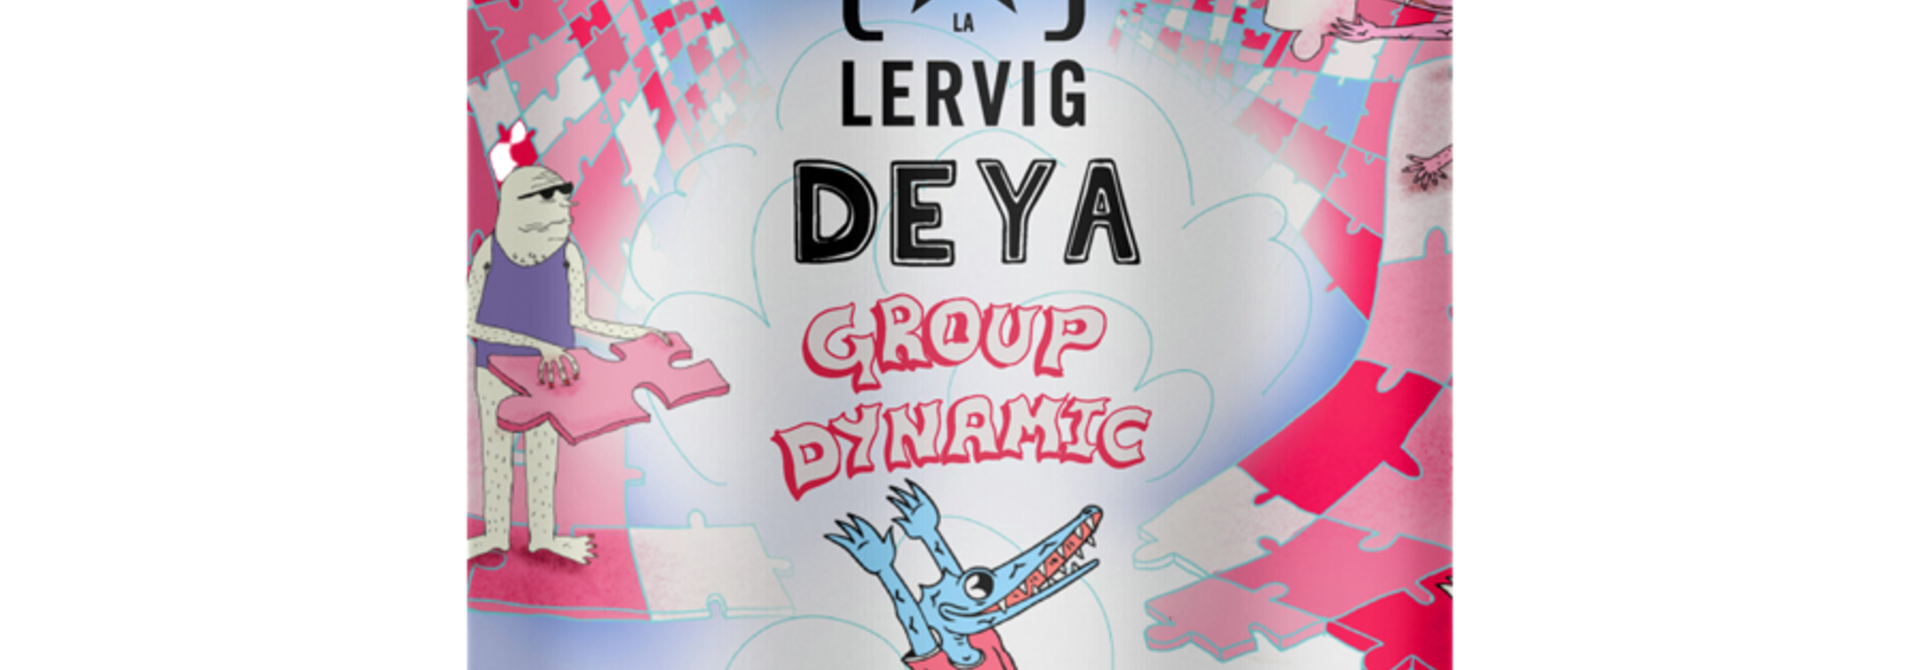 Lervig / DEYA Brewing Group Dynamic 44cl 7,7%